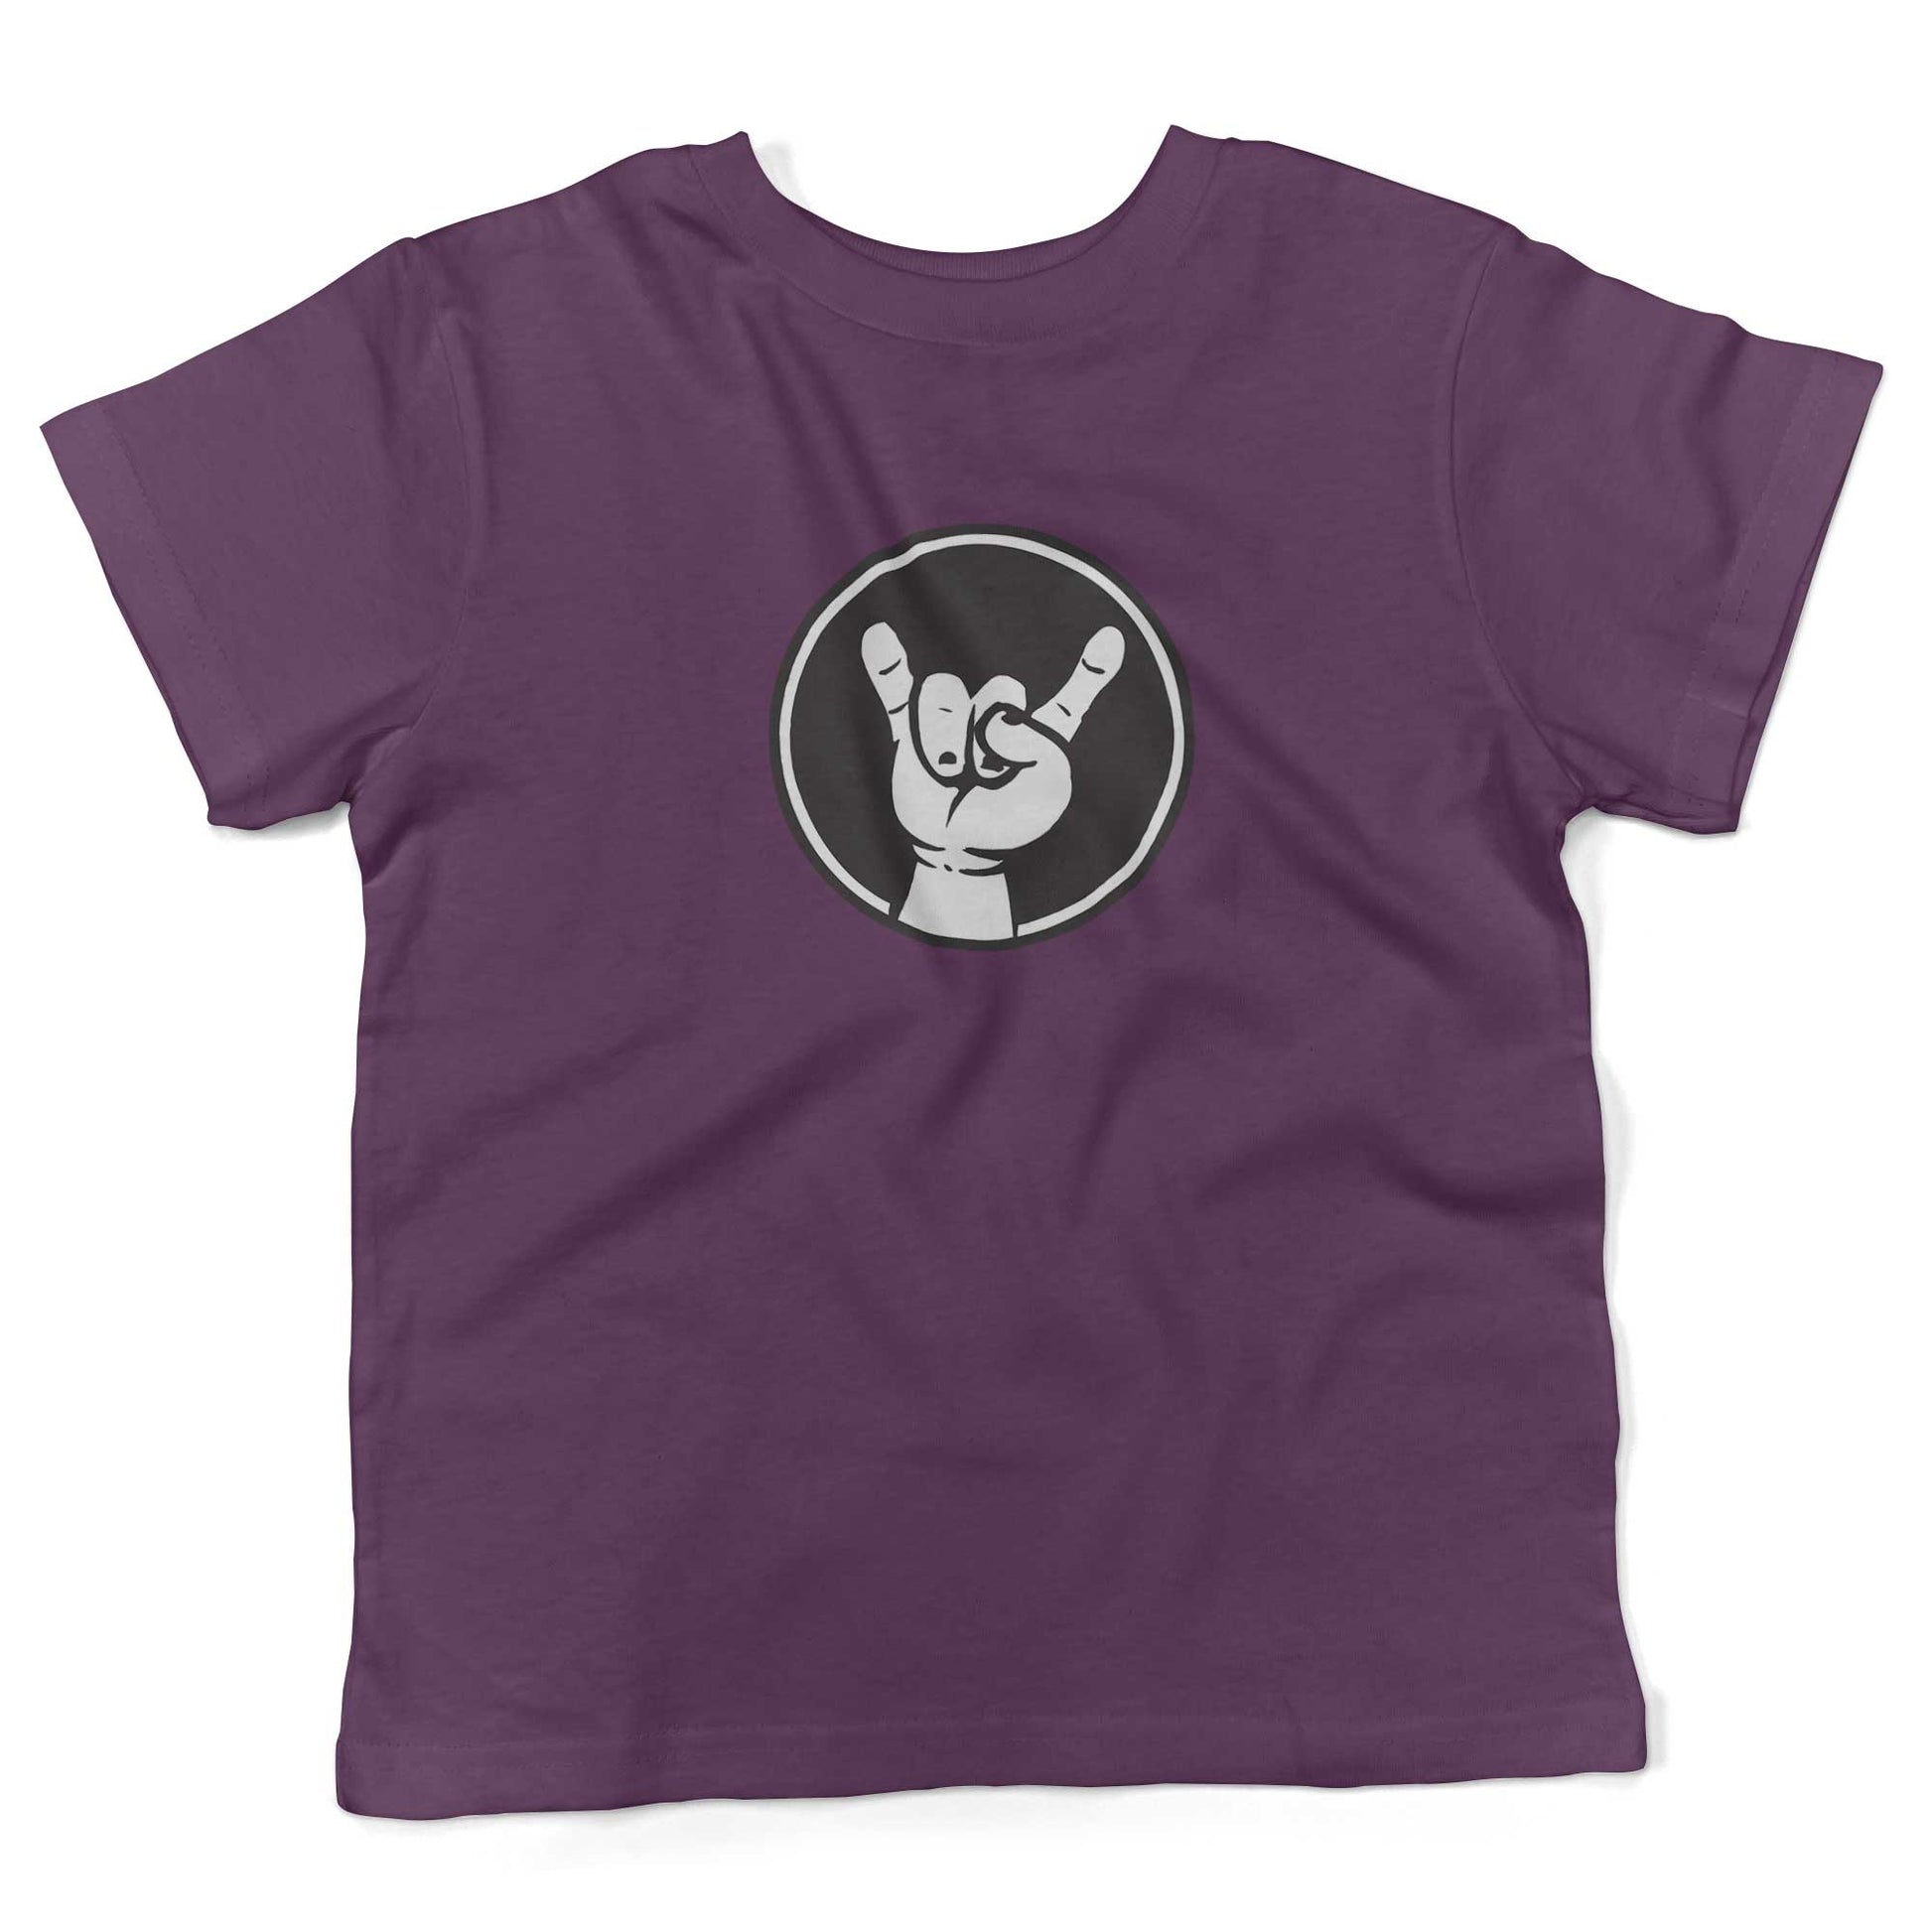 Rock Hand Symbol Toddler Shirt-Organic Purple-2T